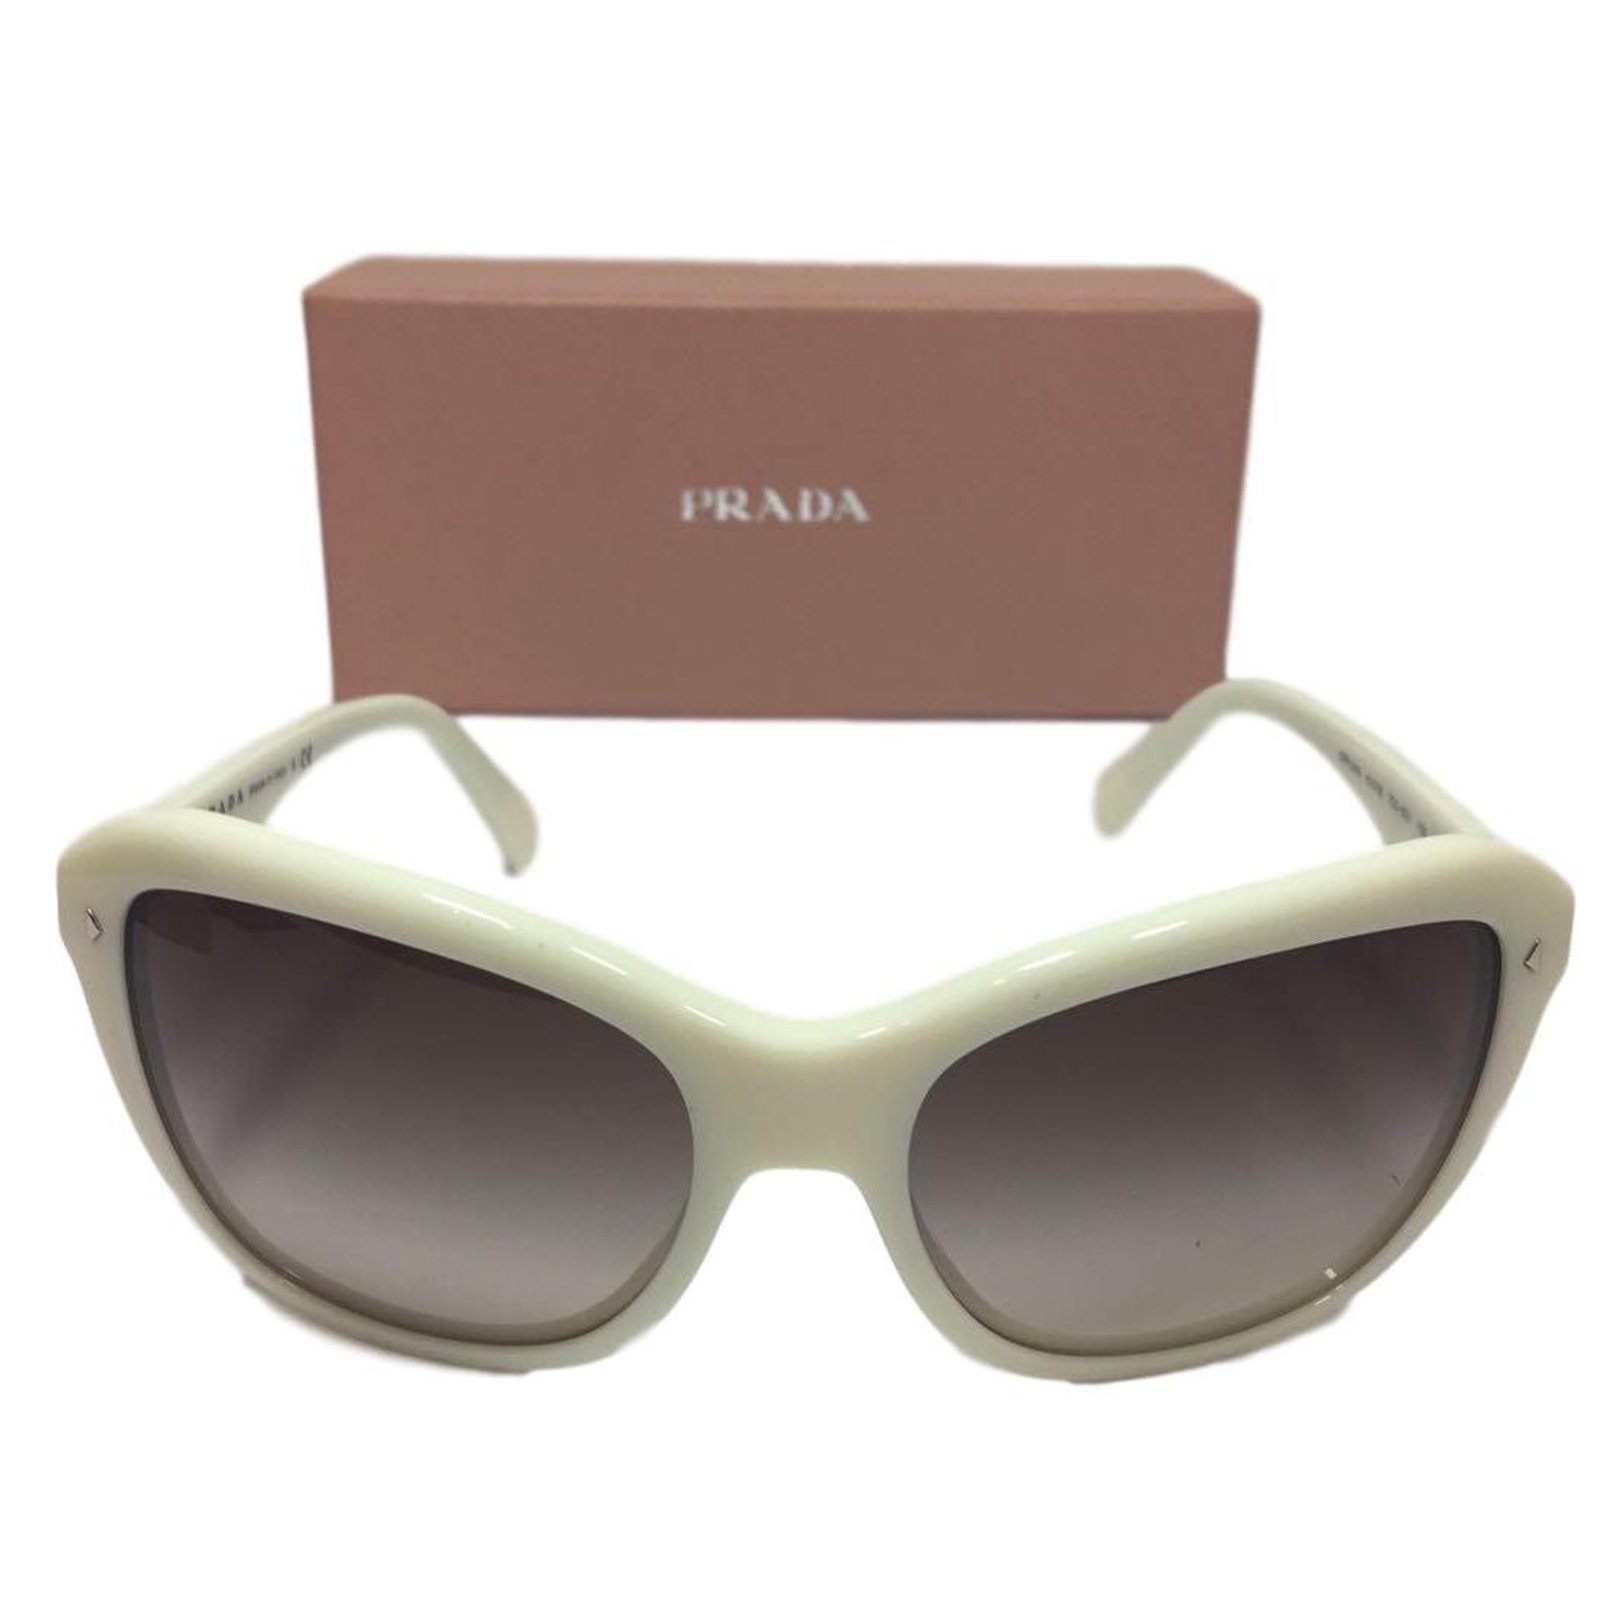 white prada sunglasses